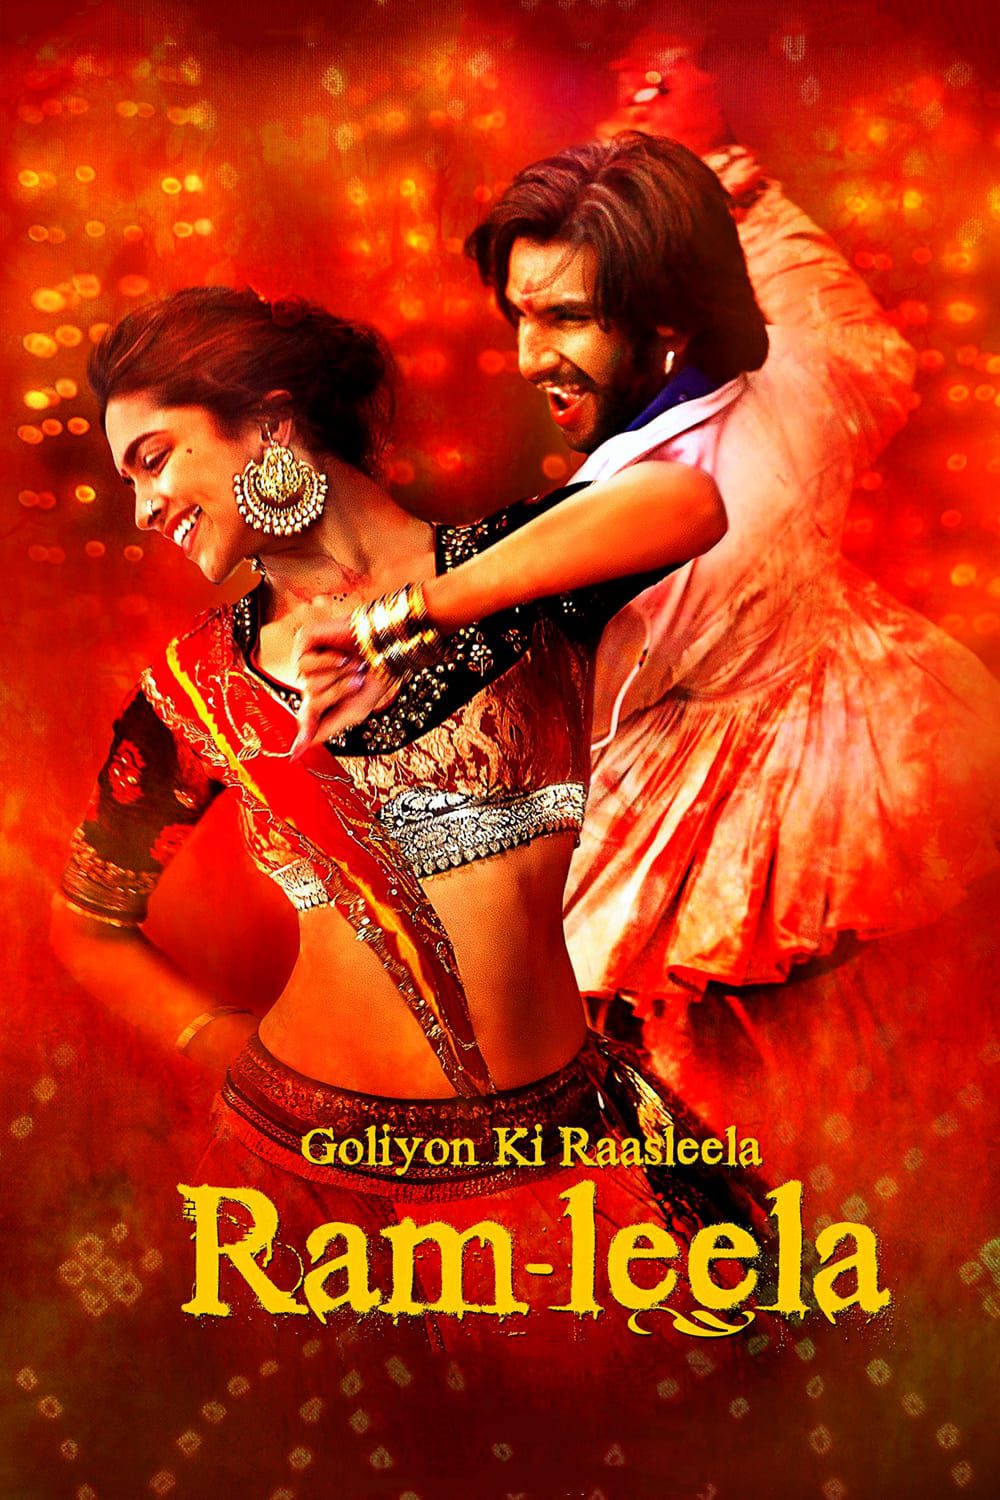 Poster for the movie "Goliyon Ki Raasleela Ram-Leela"